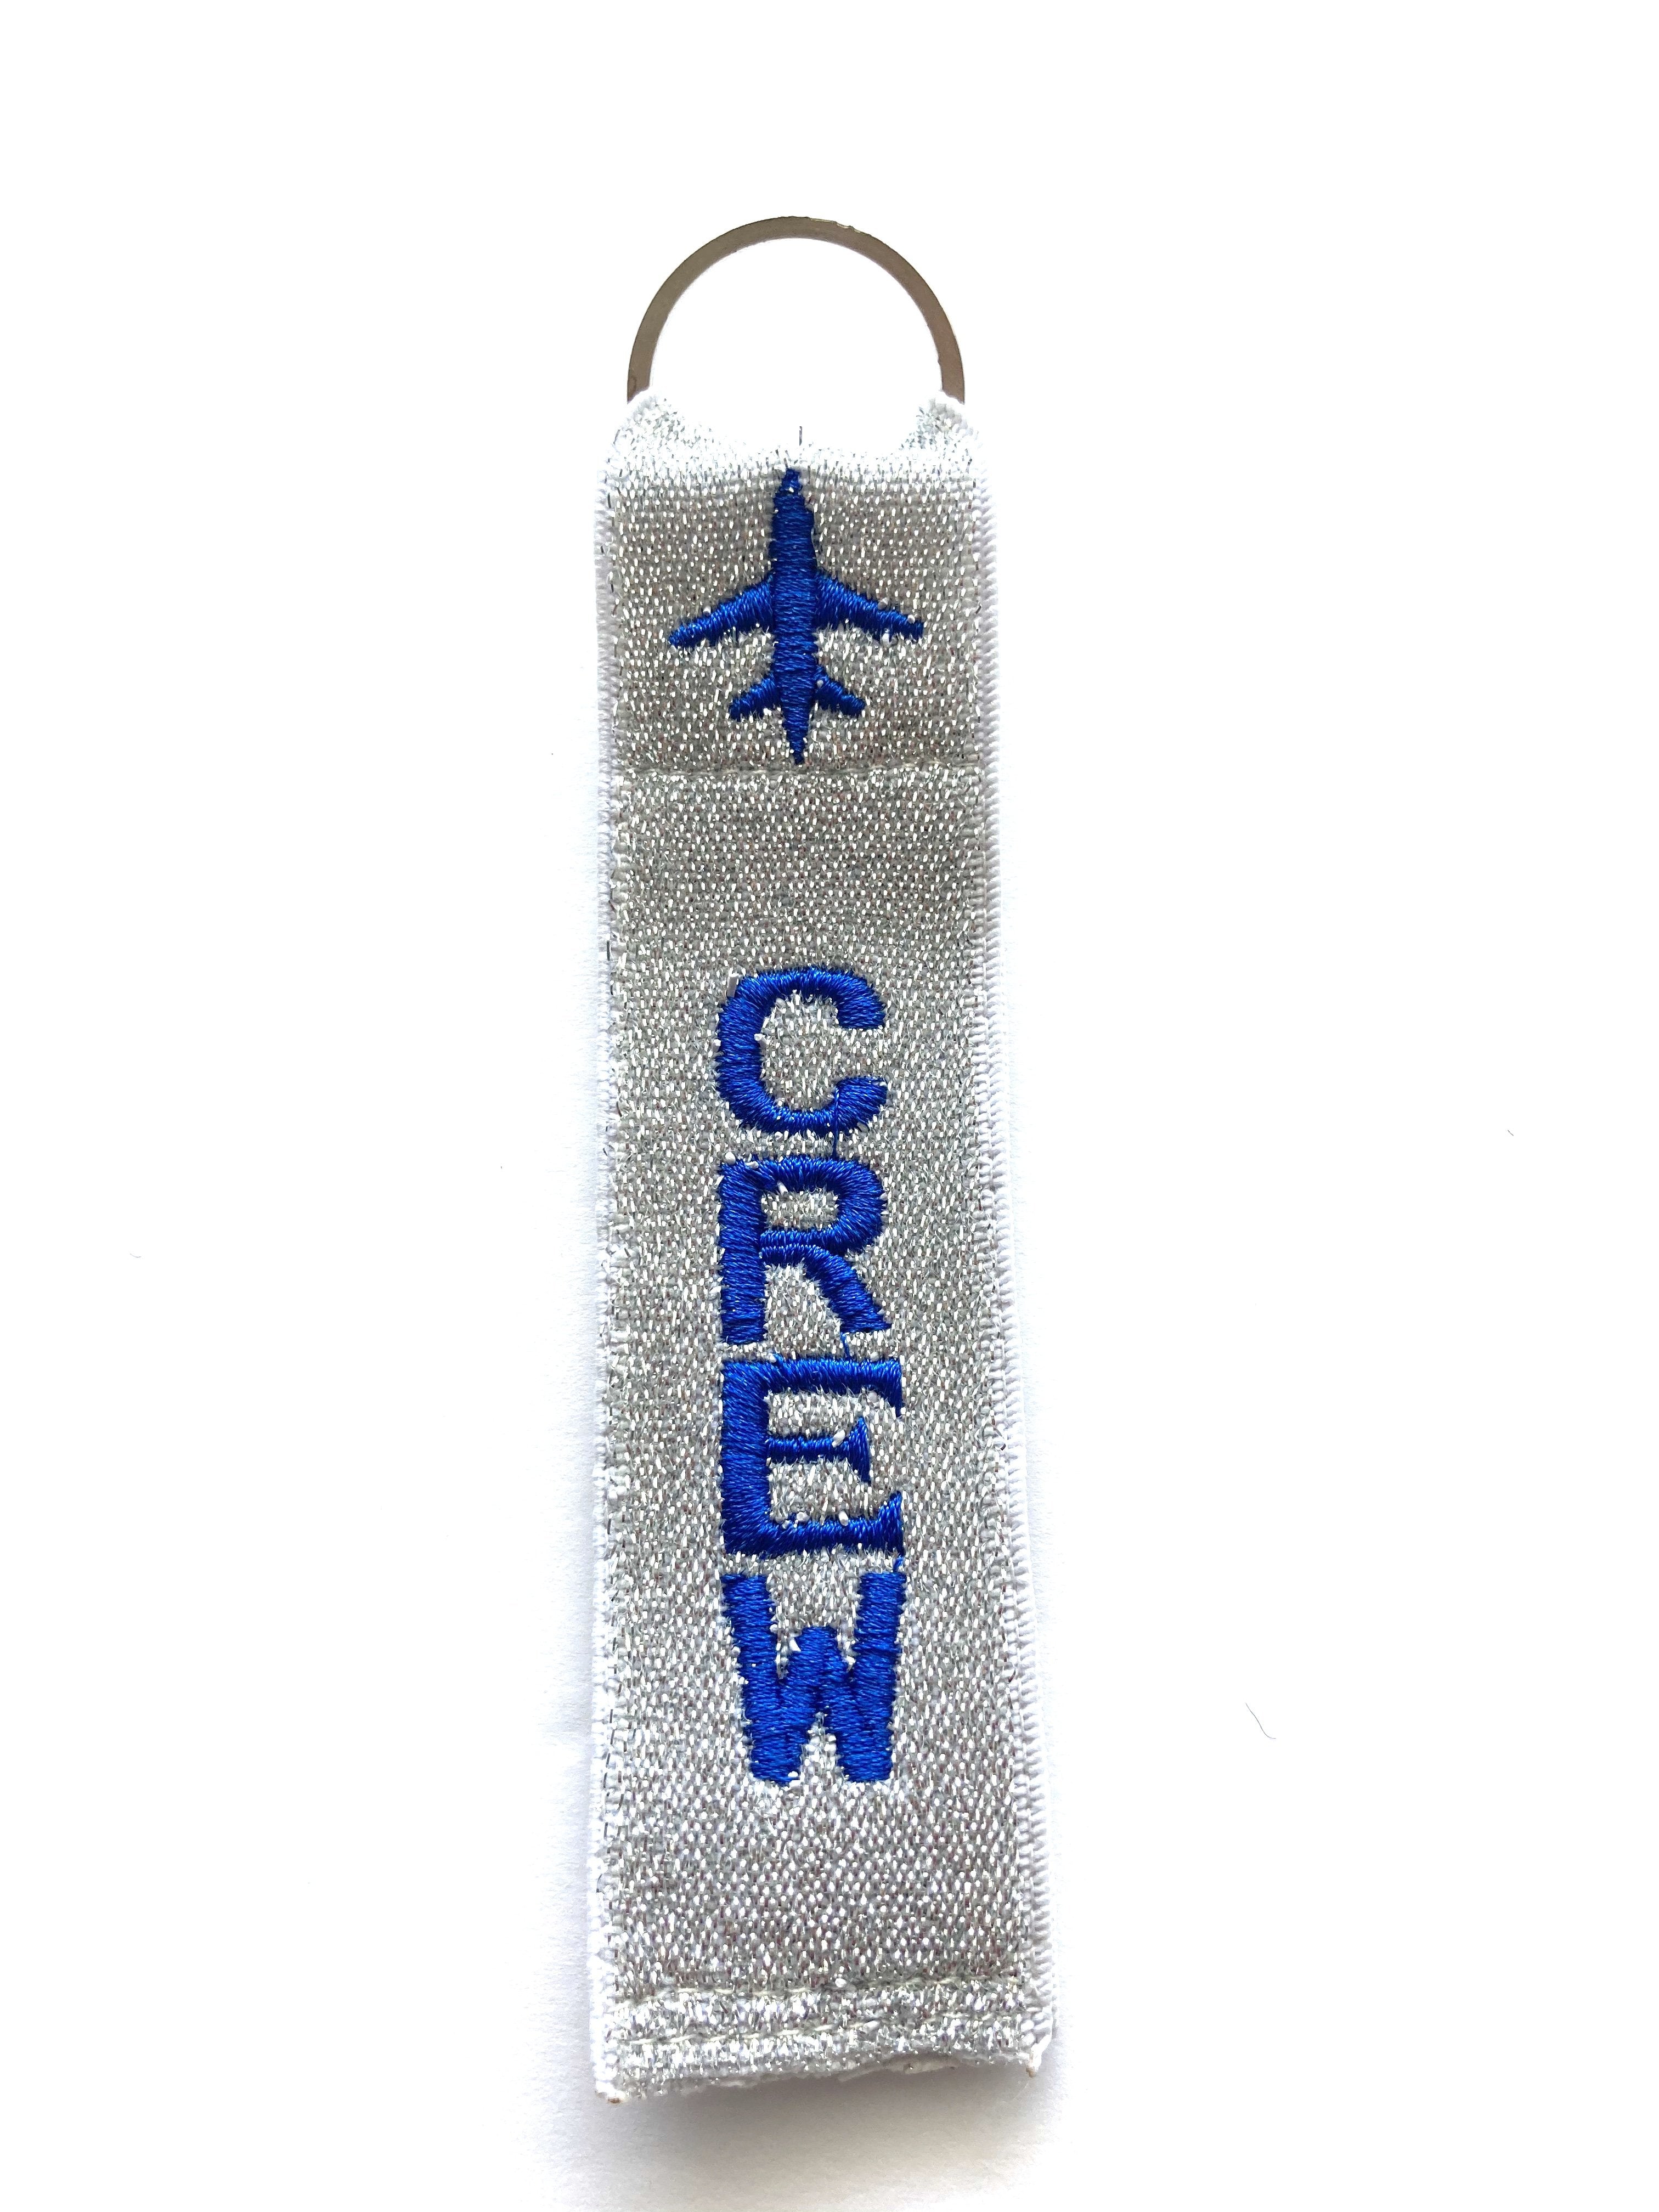 Crew Key Ring Luggage Tag - Blue on Silver